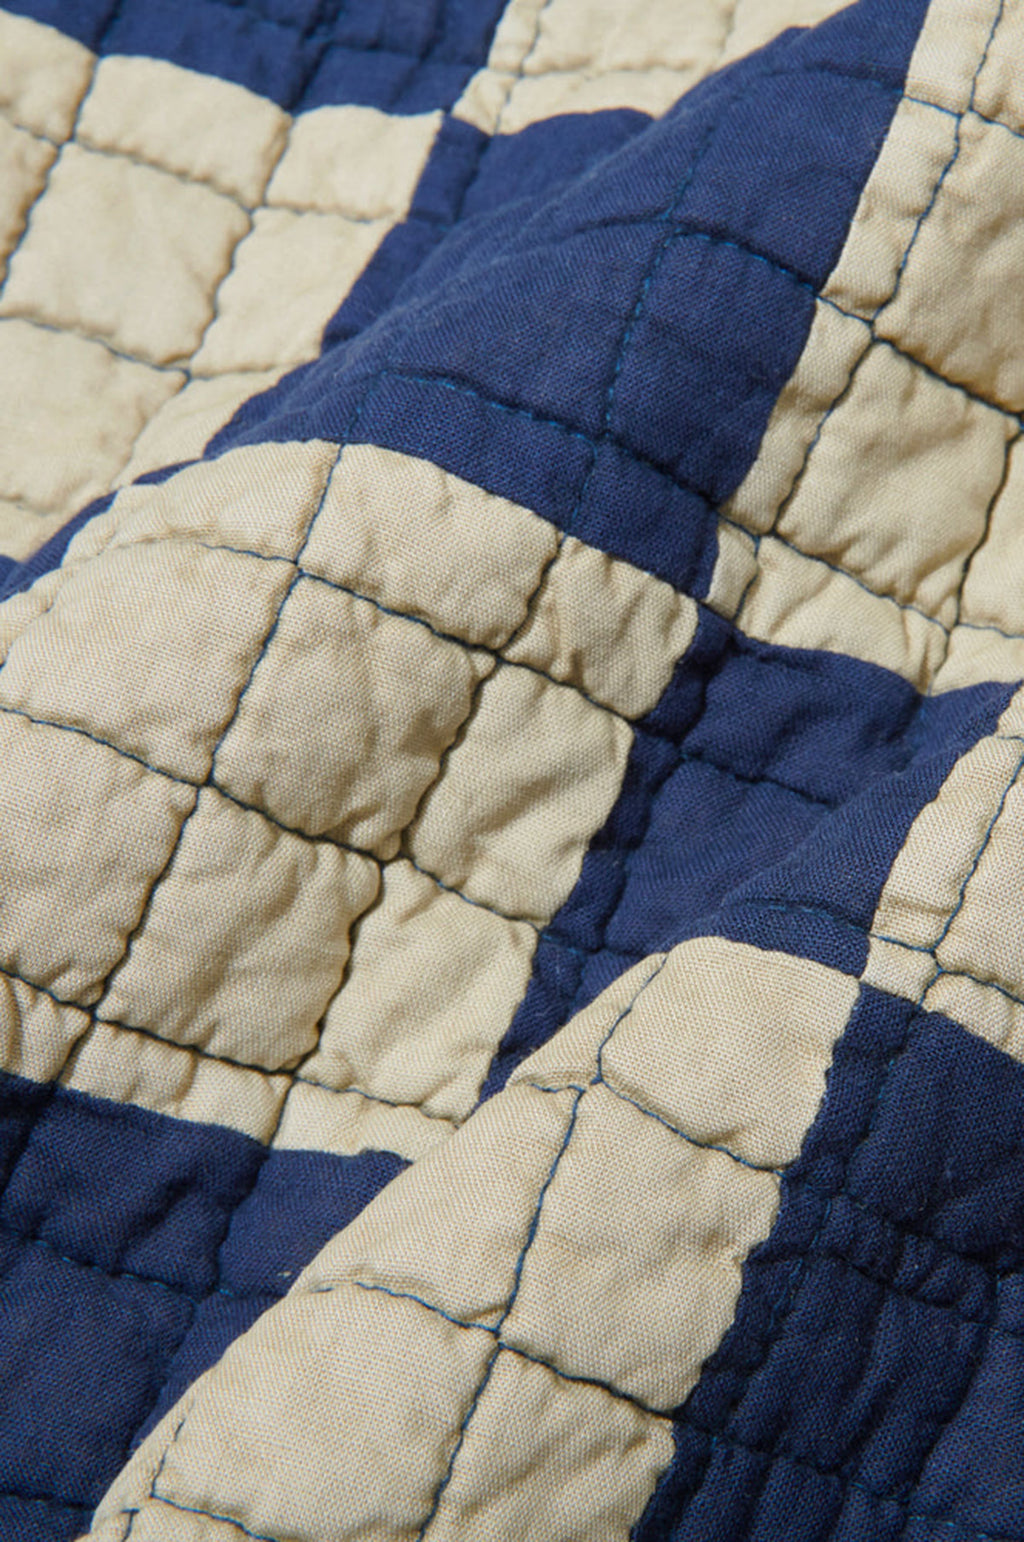 BasShu Patchwork Quilt in Navy Blue – The Hambledon